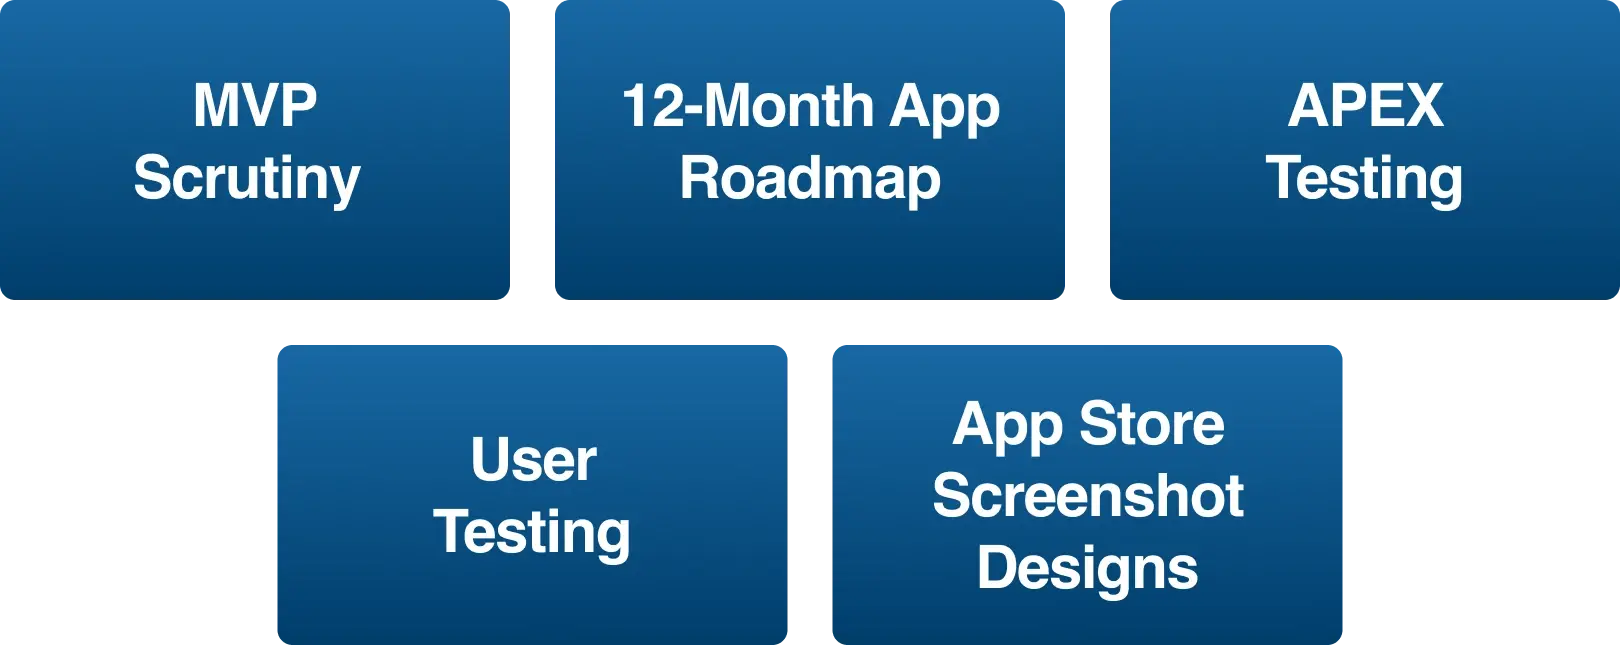 App Growth Starter Kit Image